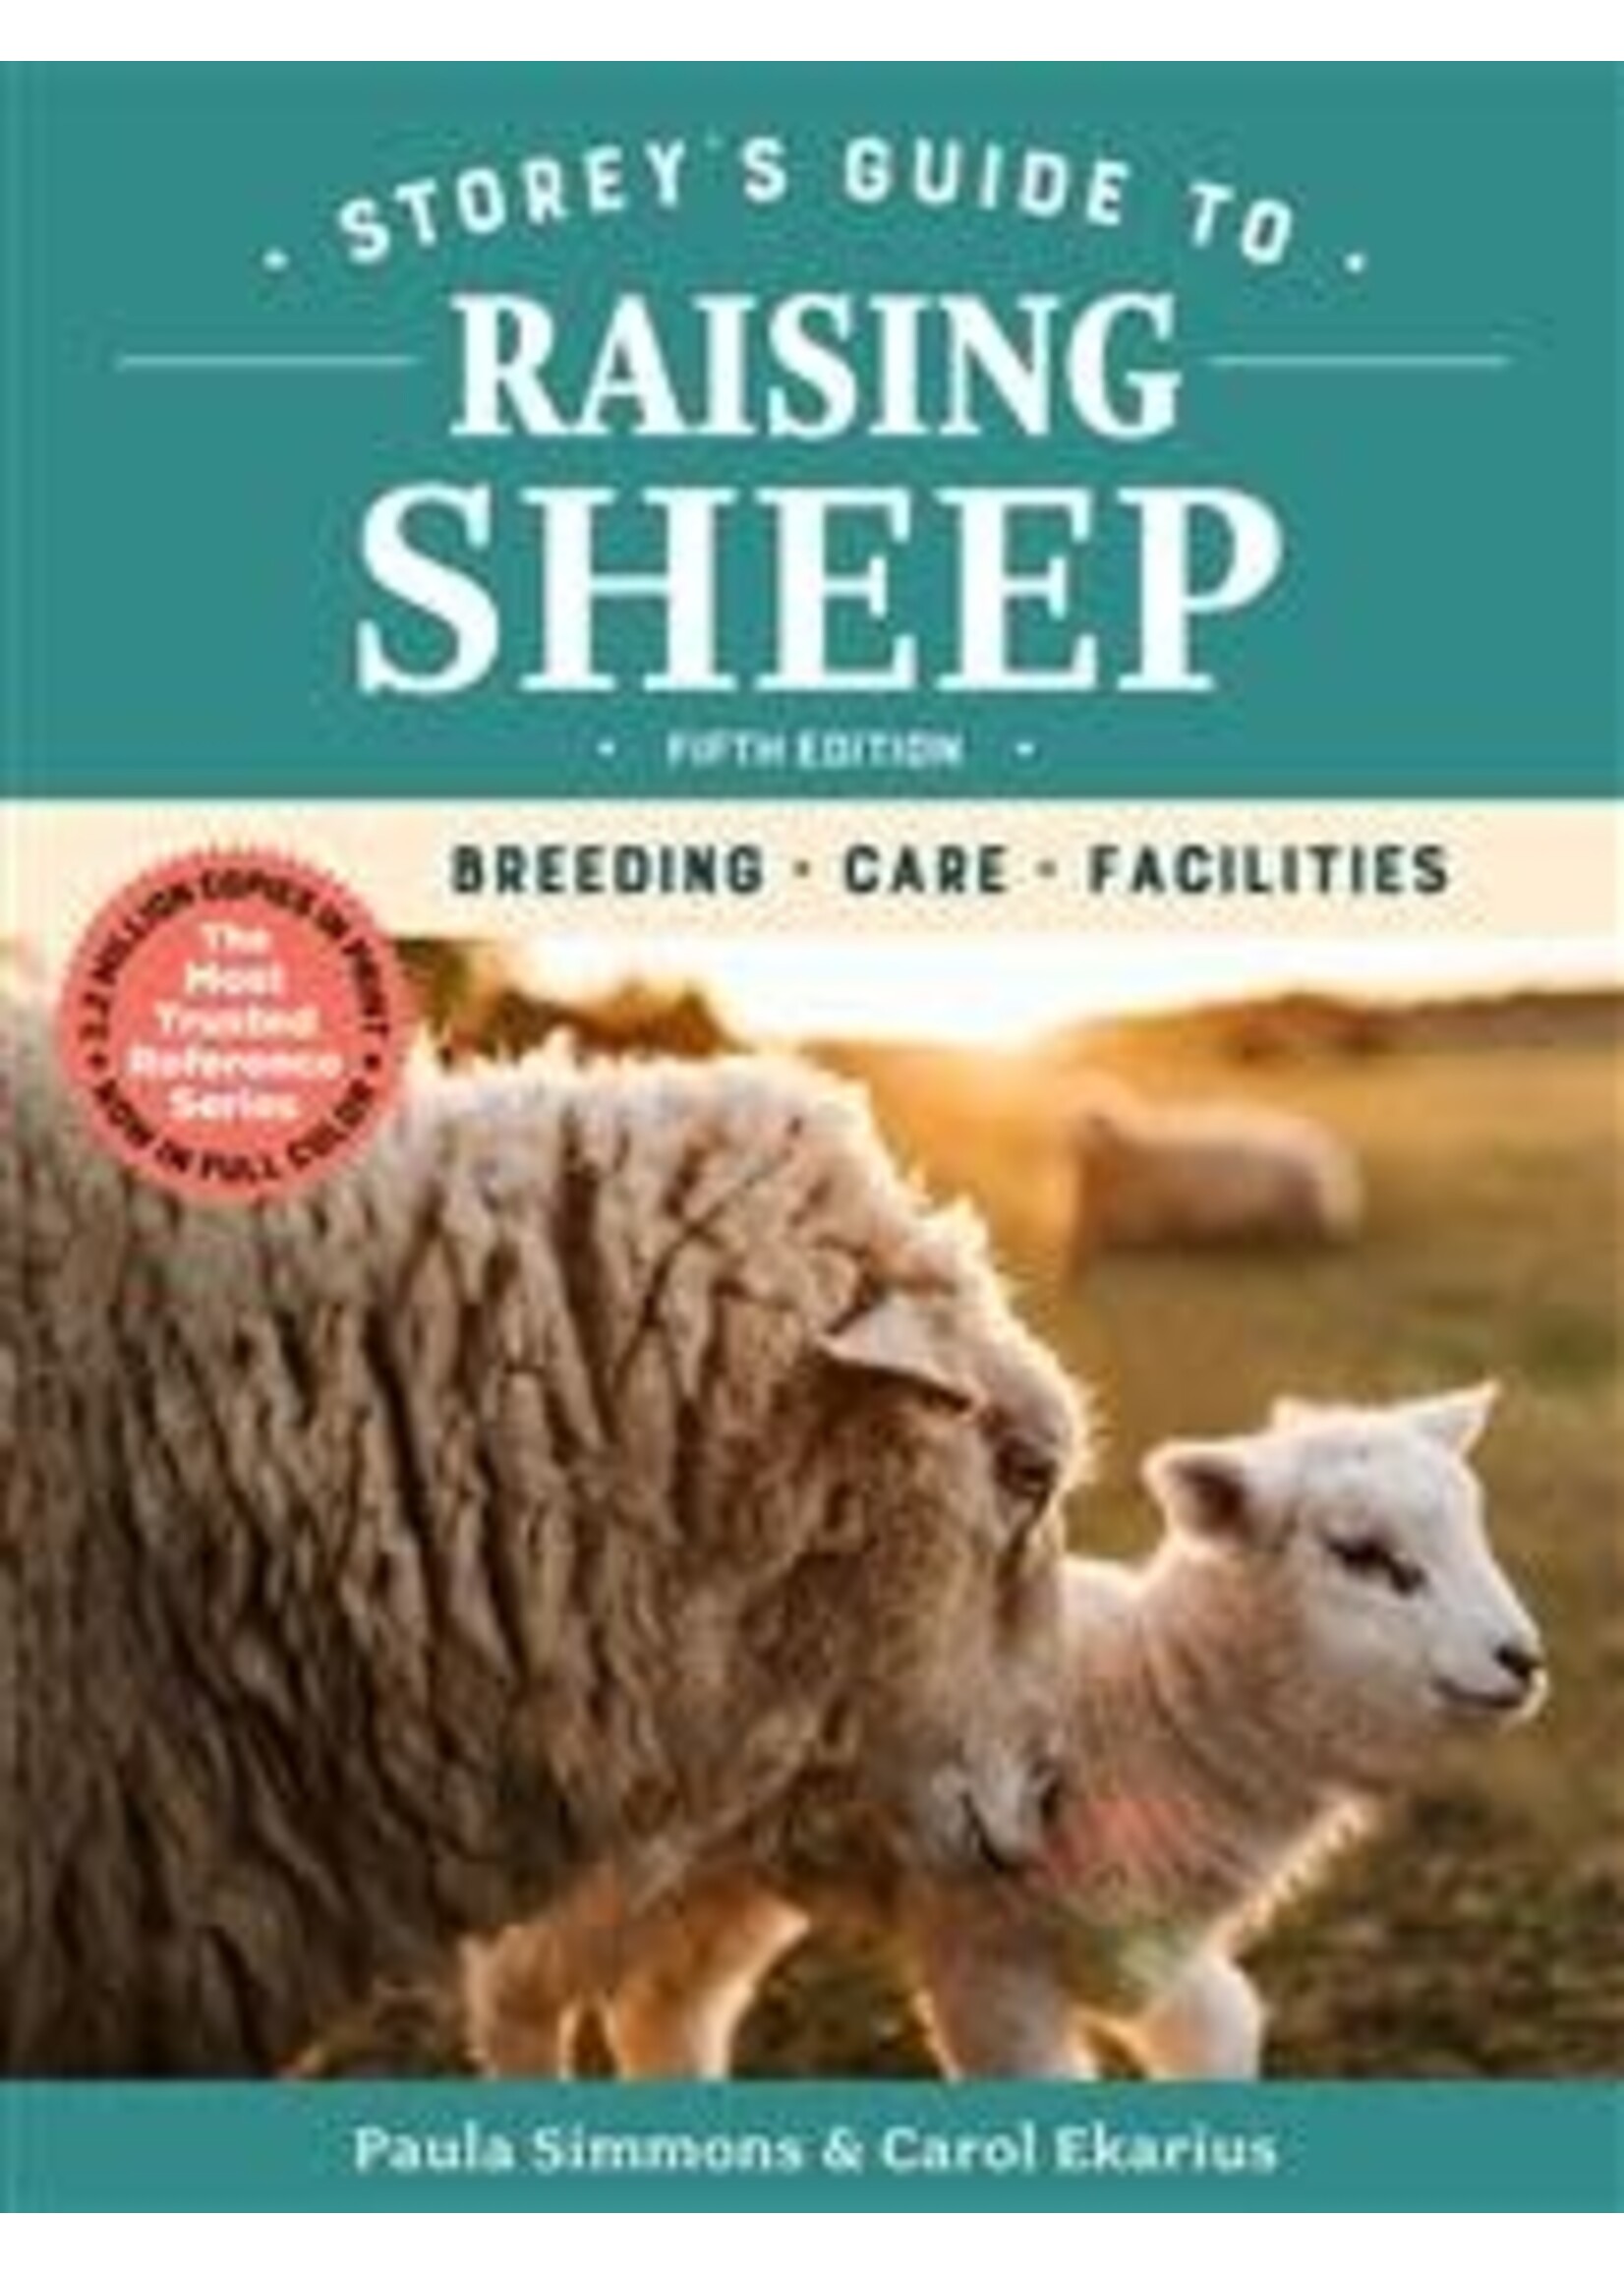 Storey's Guide to Raising Sheep, 5th Ed.: Breeding, Care, Facilities by Paula Simmons, Carol Ekarius